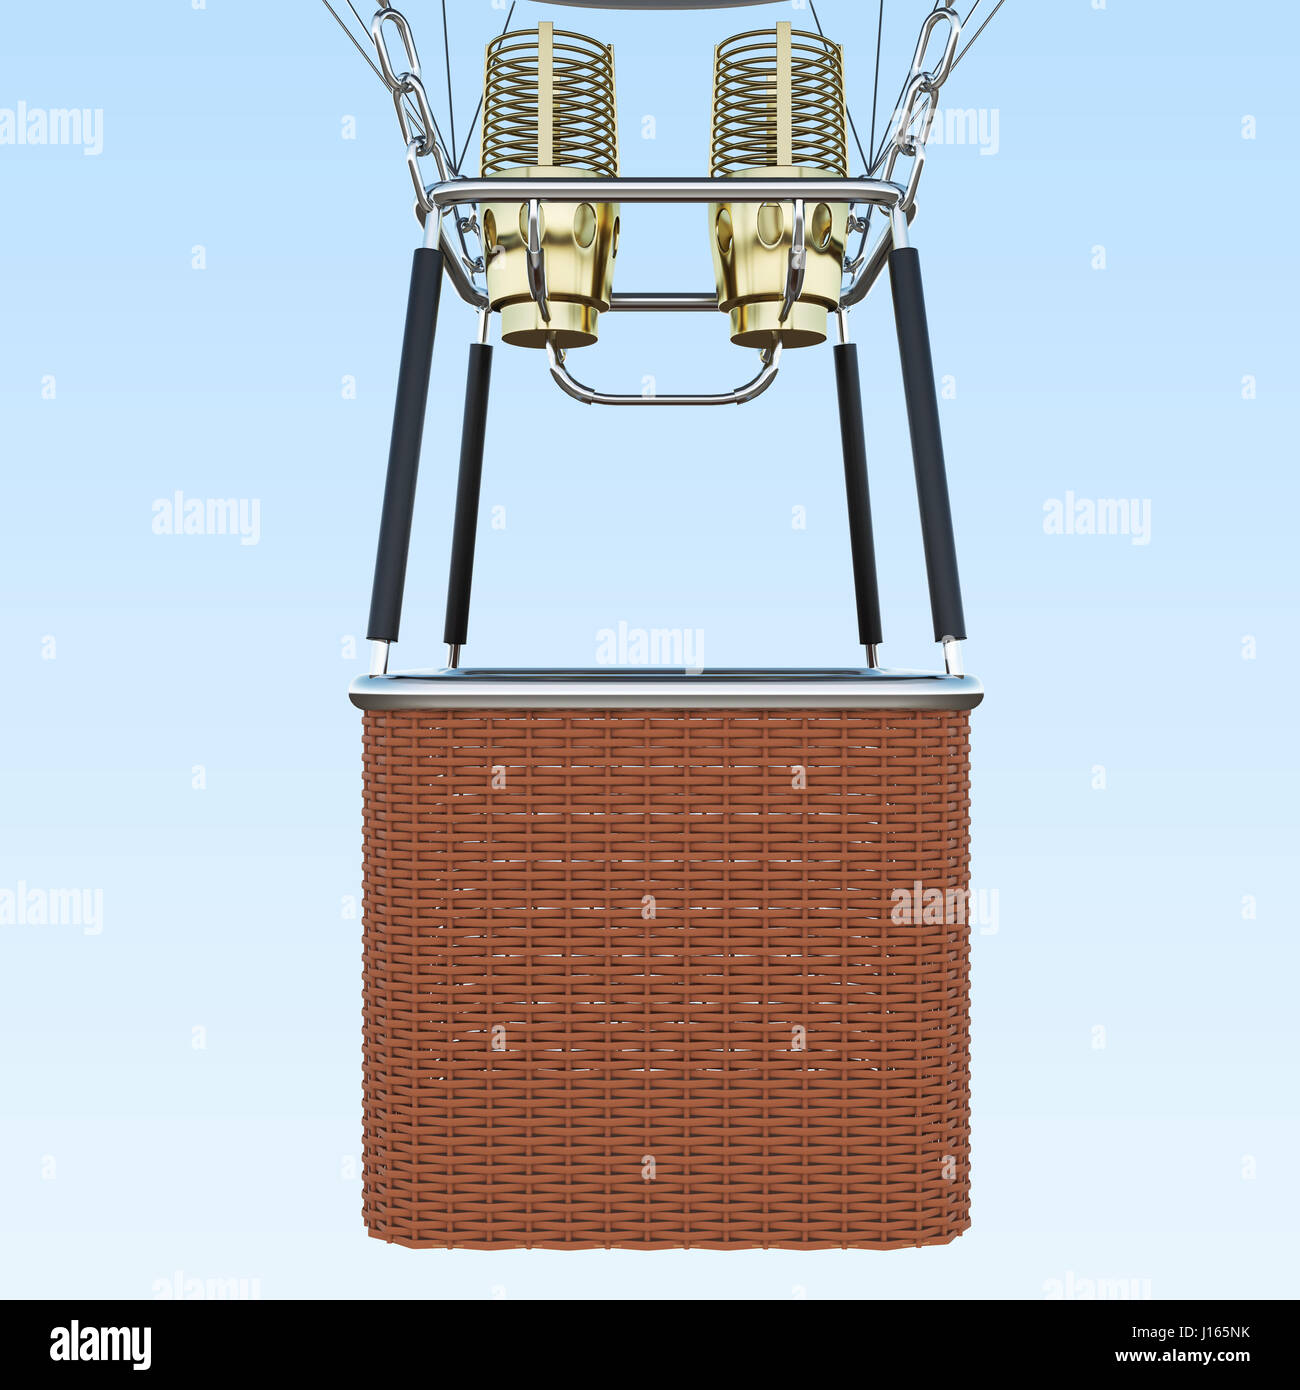 Basket on blue sky background, together with the burner. 3d rendering Stock Photo